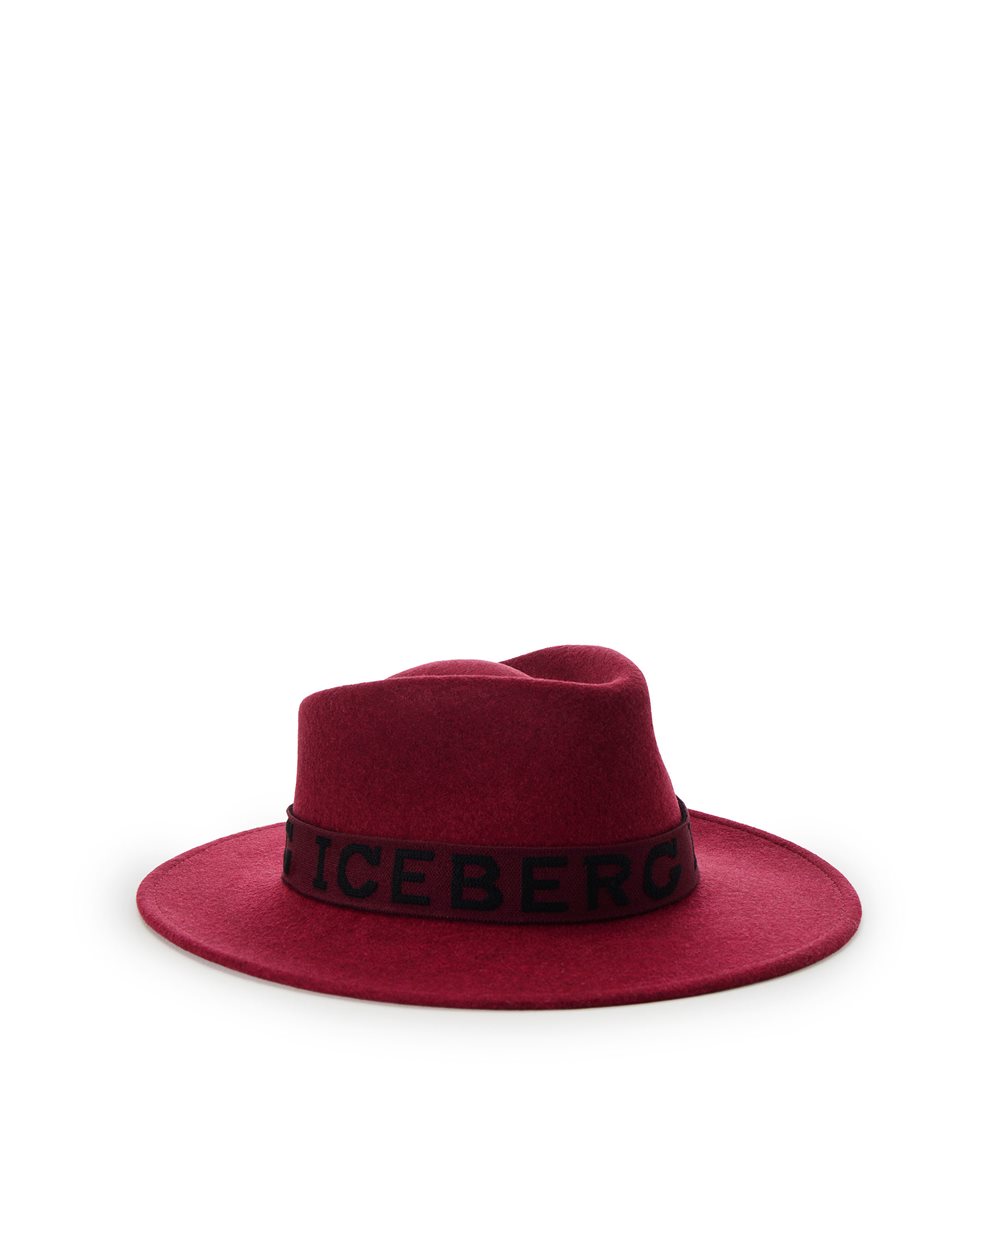 Felt Rancher hat - carosello HP woman accessories | Iceberg - Official Website